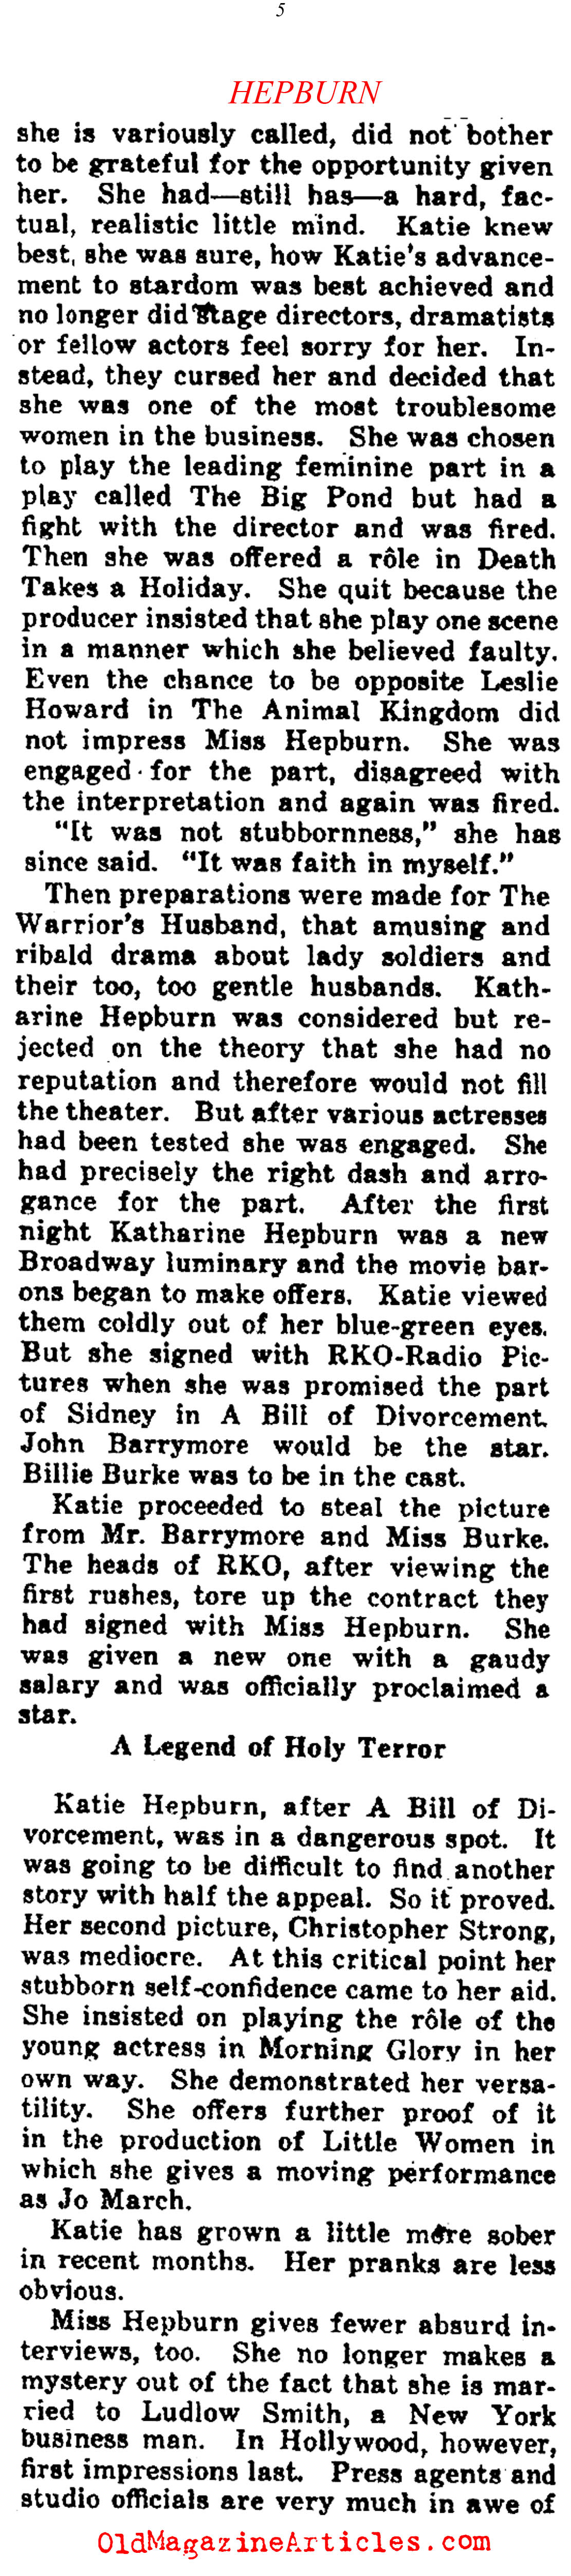 One of the First Katherine Hepburn Interviews (Collier's Magazine, 1933)